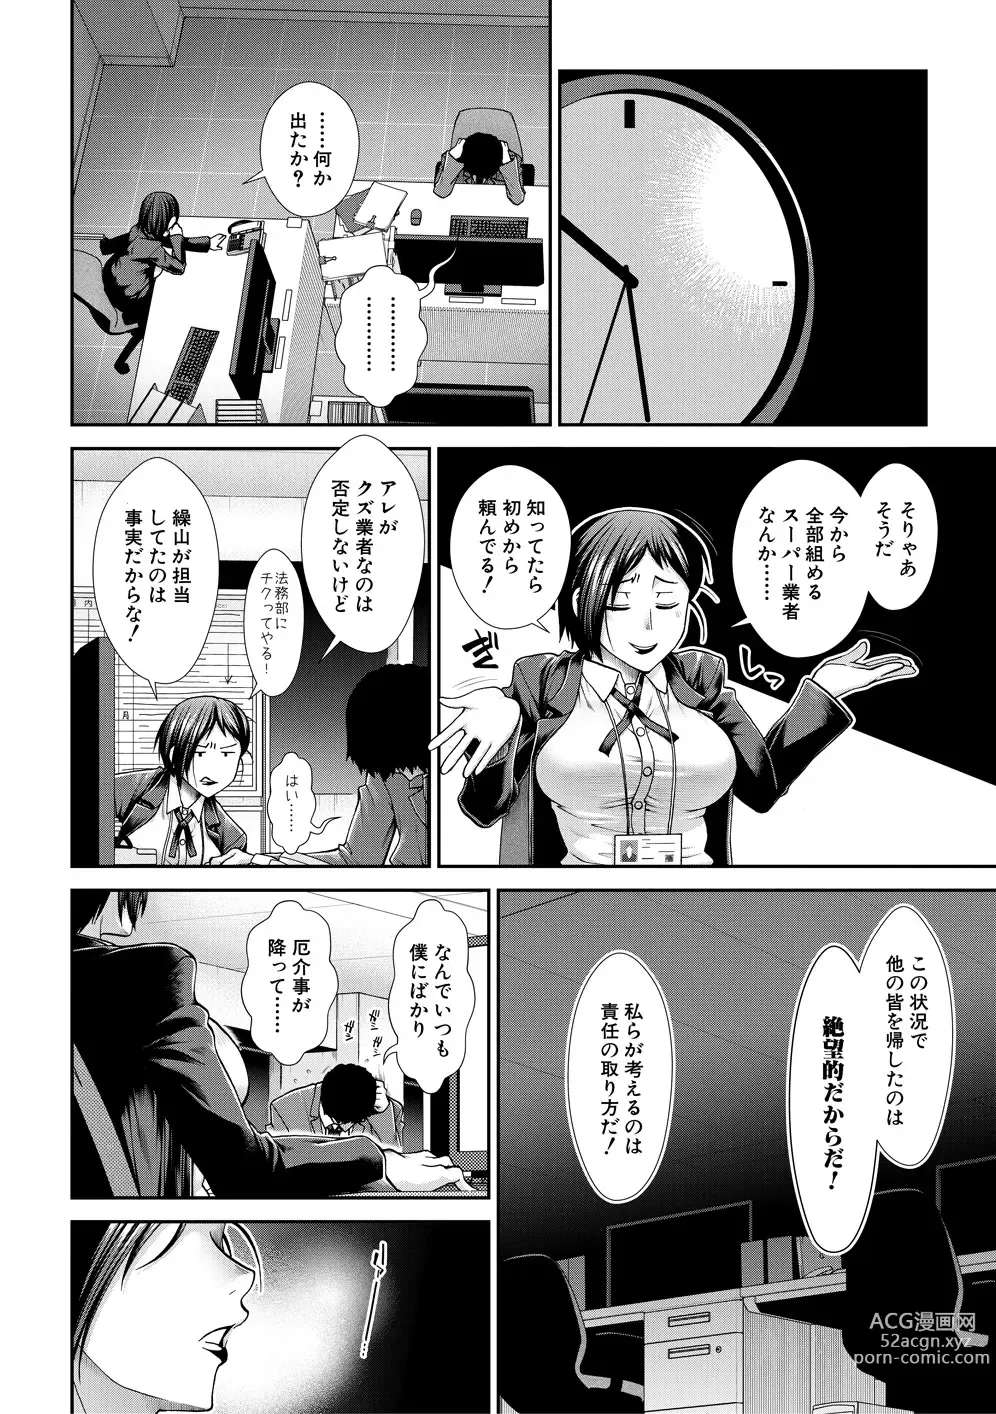 Page 6 of manga Ketsuhara